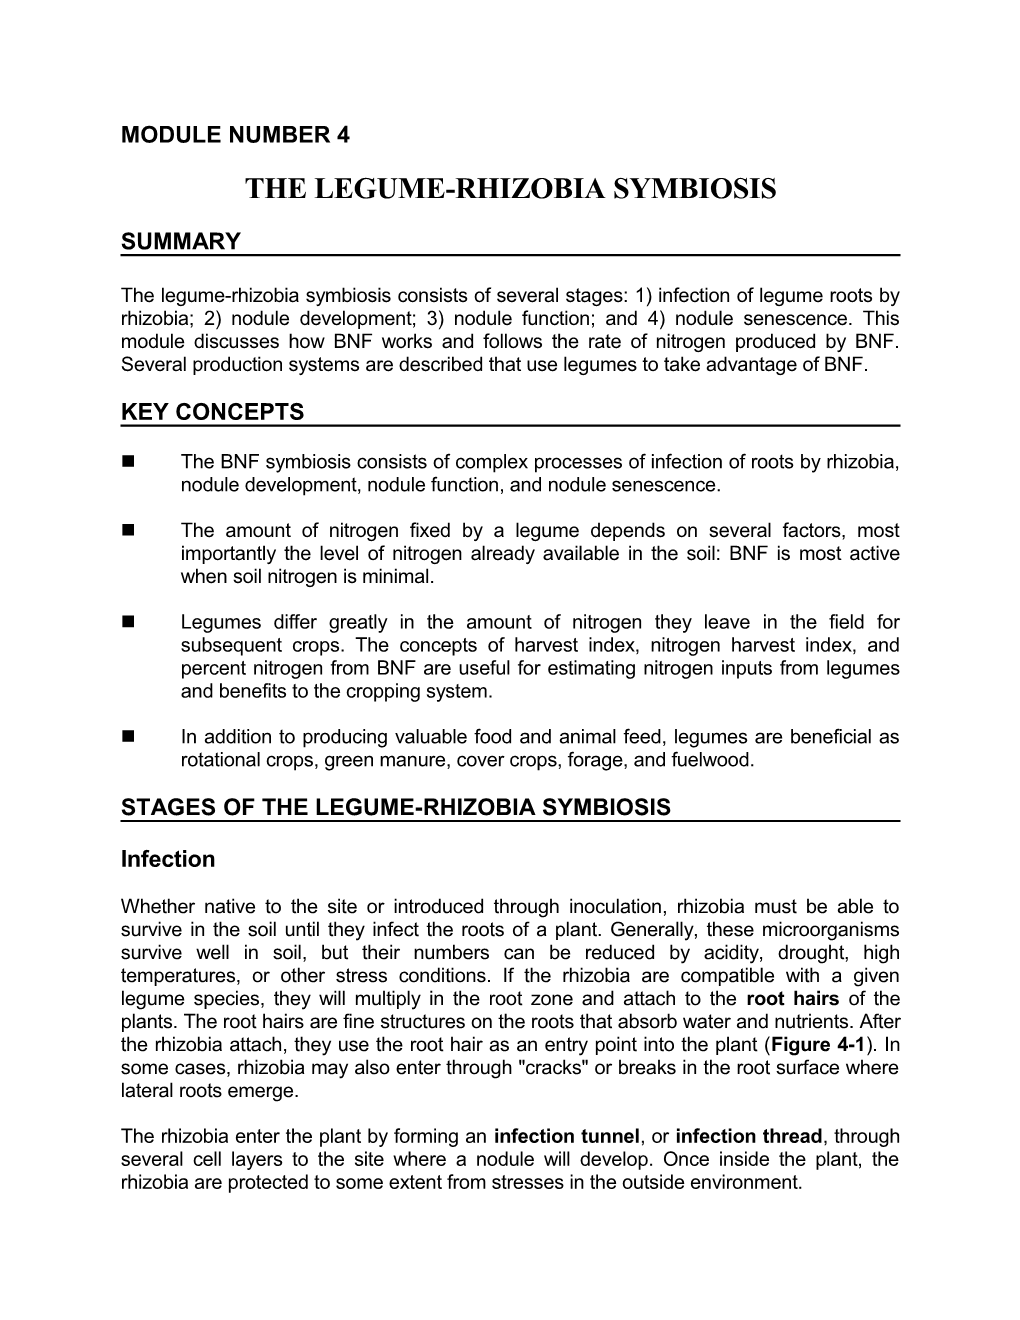 The Legume-Rhizobia Symbiosis